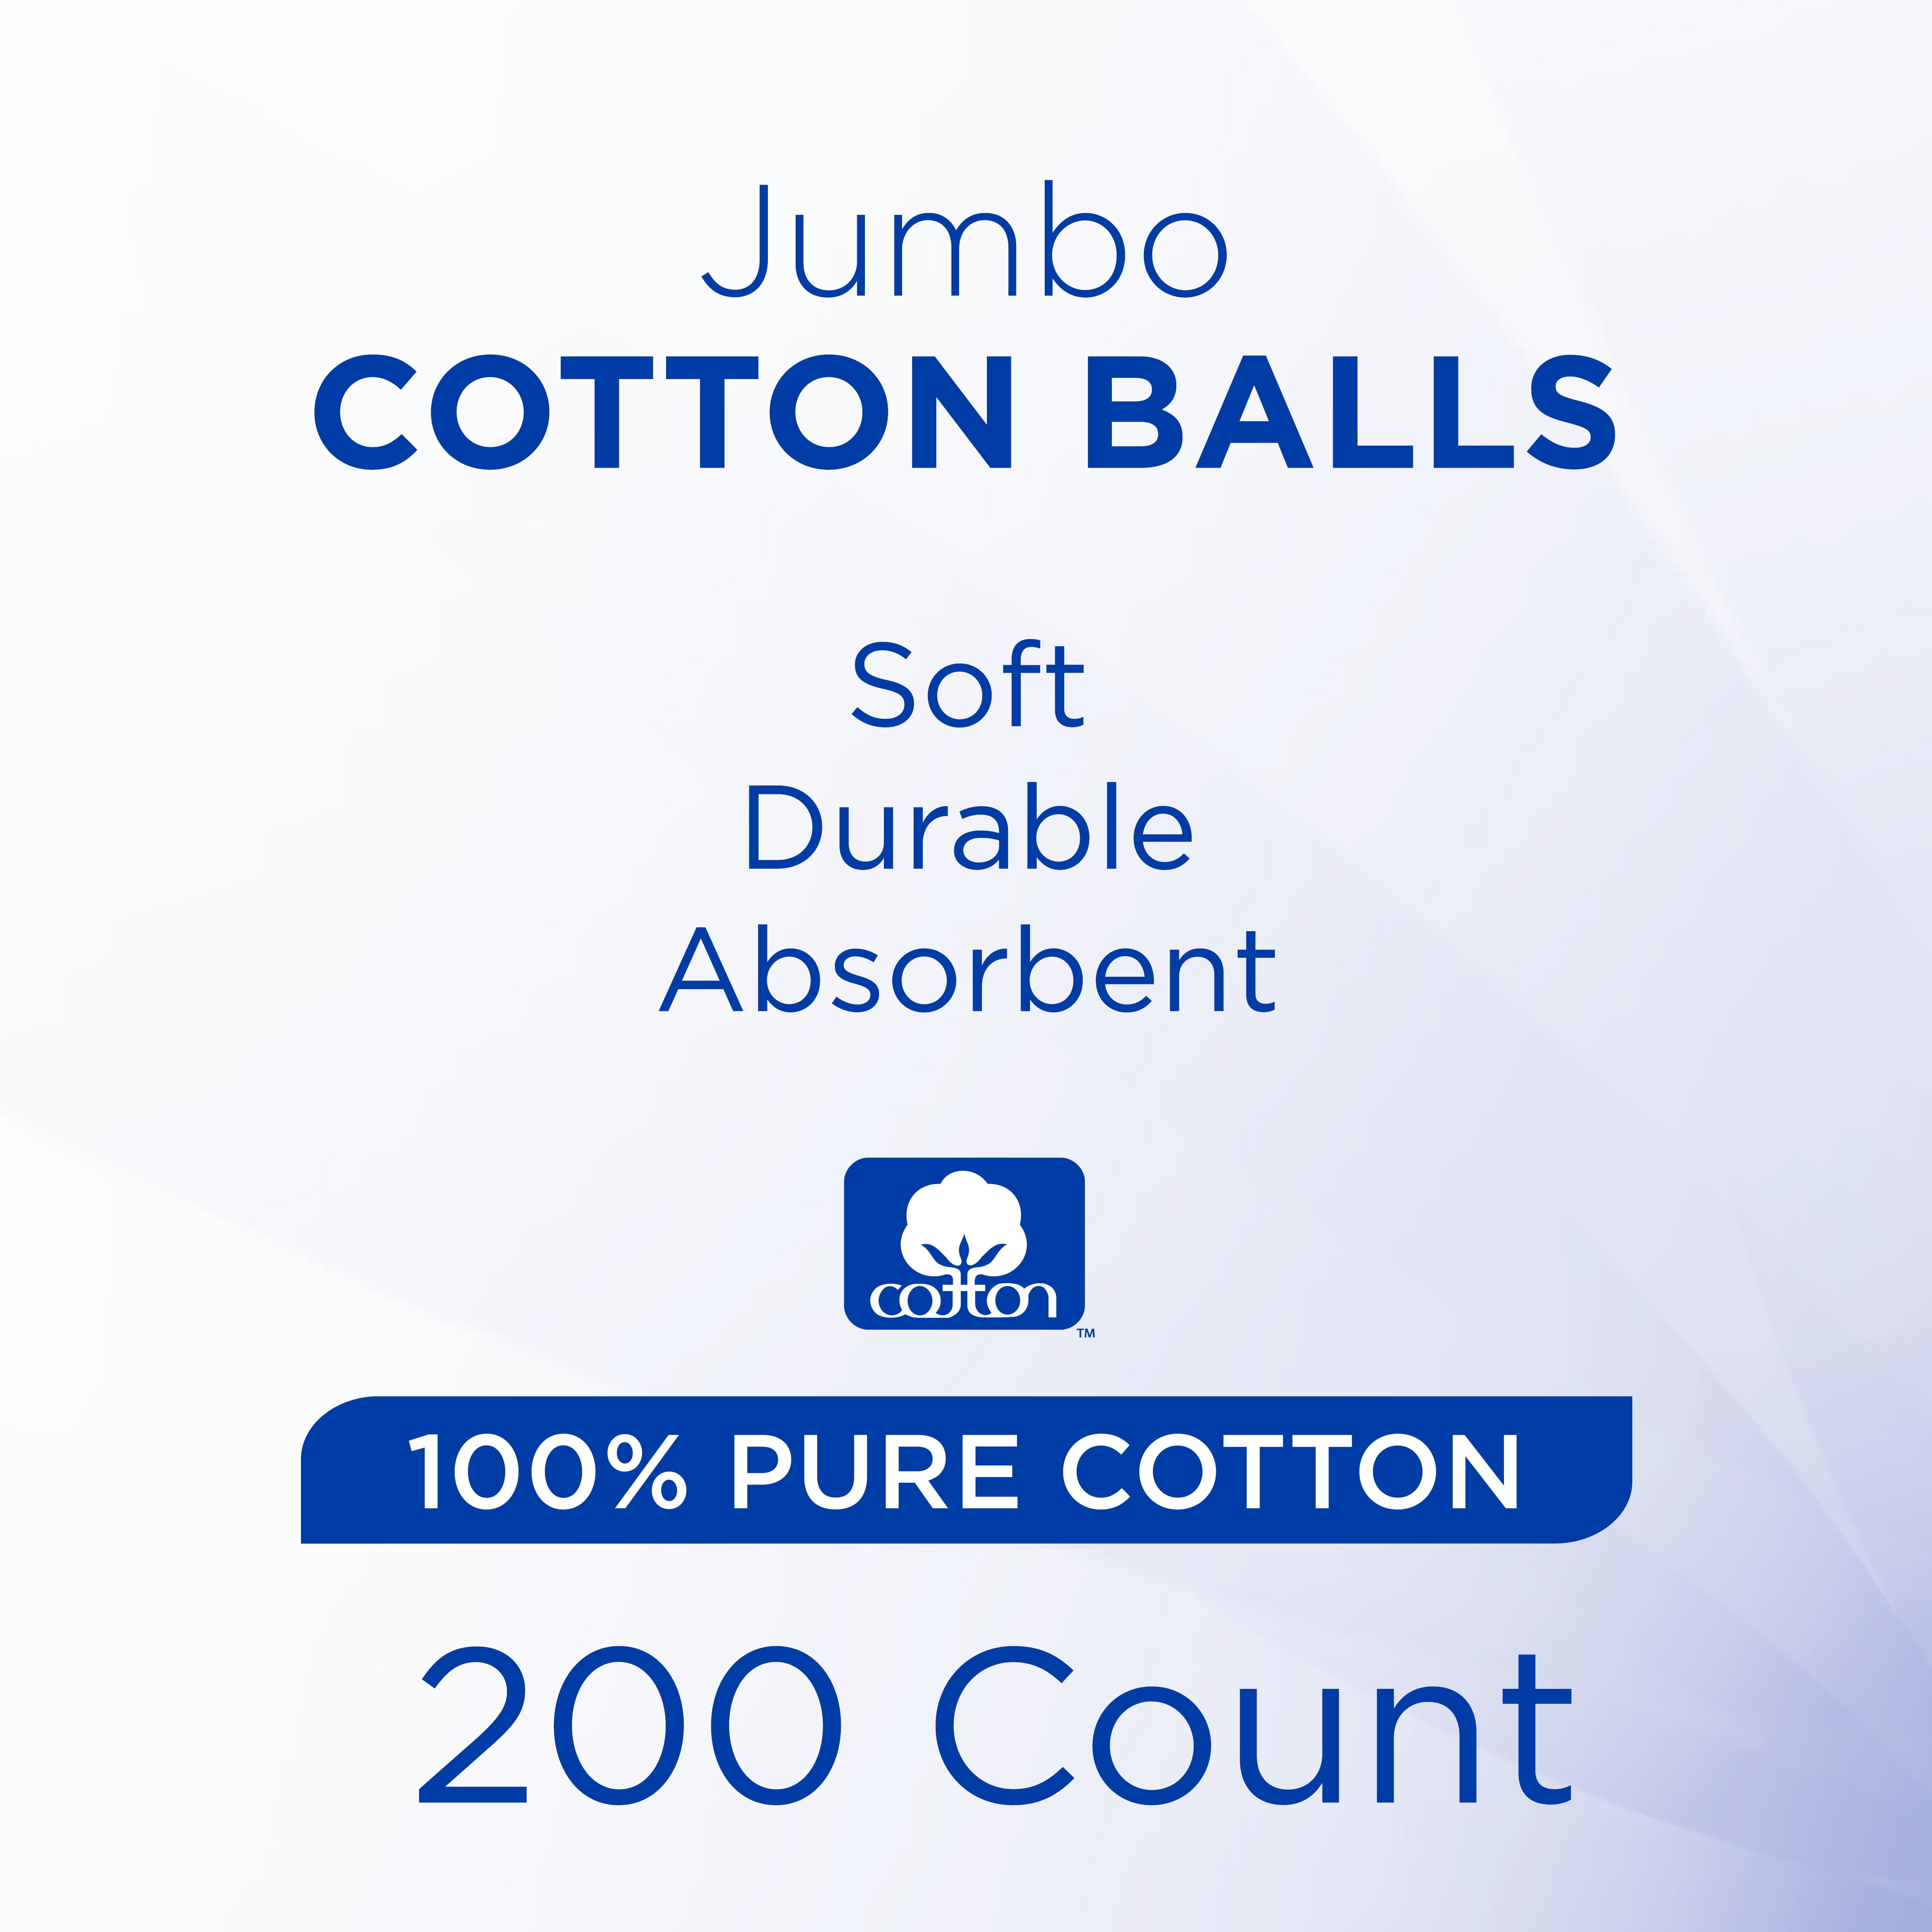 Cotton Balls Large Bg/200  ADVANCED DISCOUNT MEDICAL SUPPLIES AND EQUIPMENT